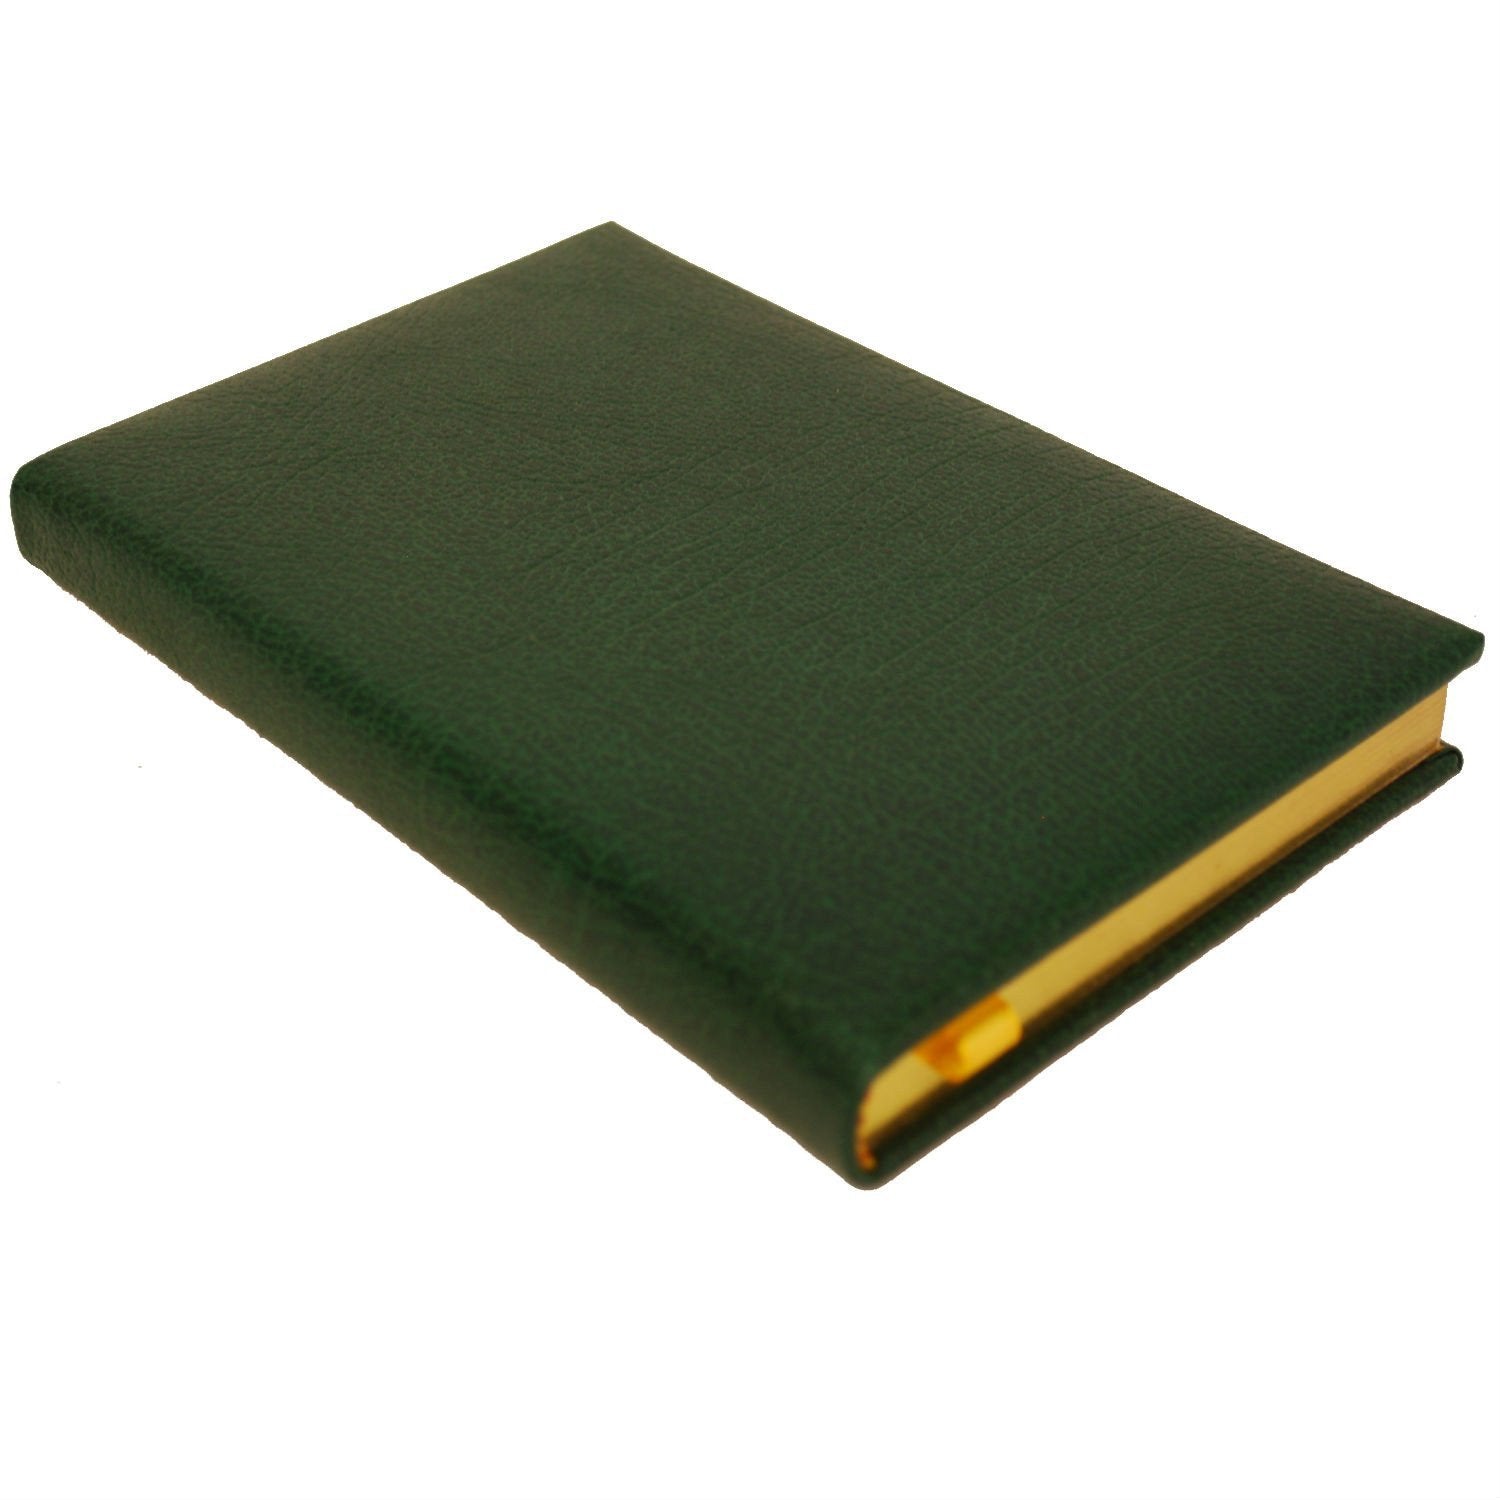 Buffalo Leather Journal - Unlined Notebook - Black